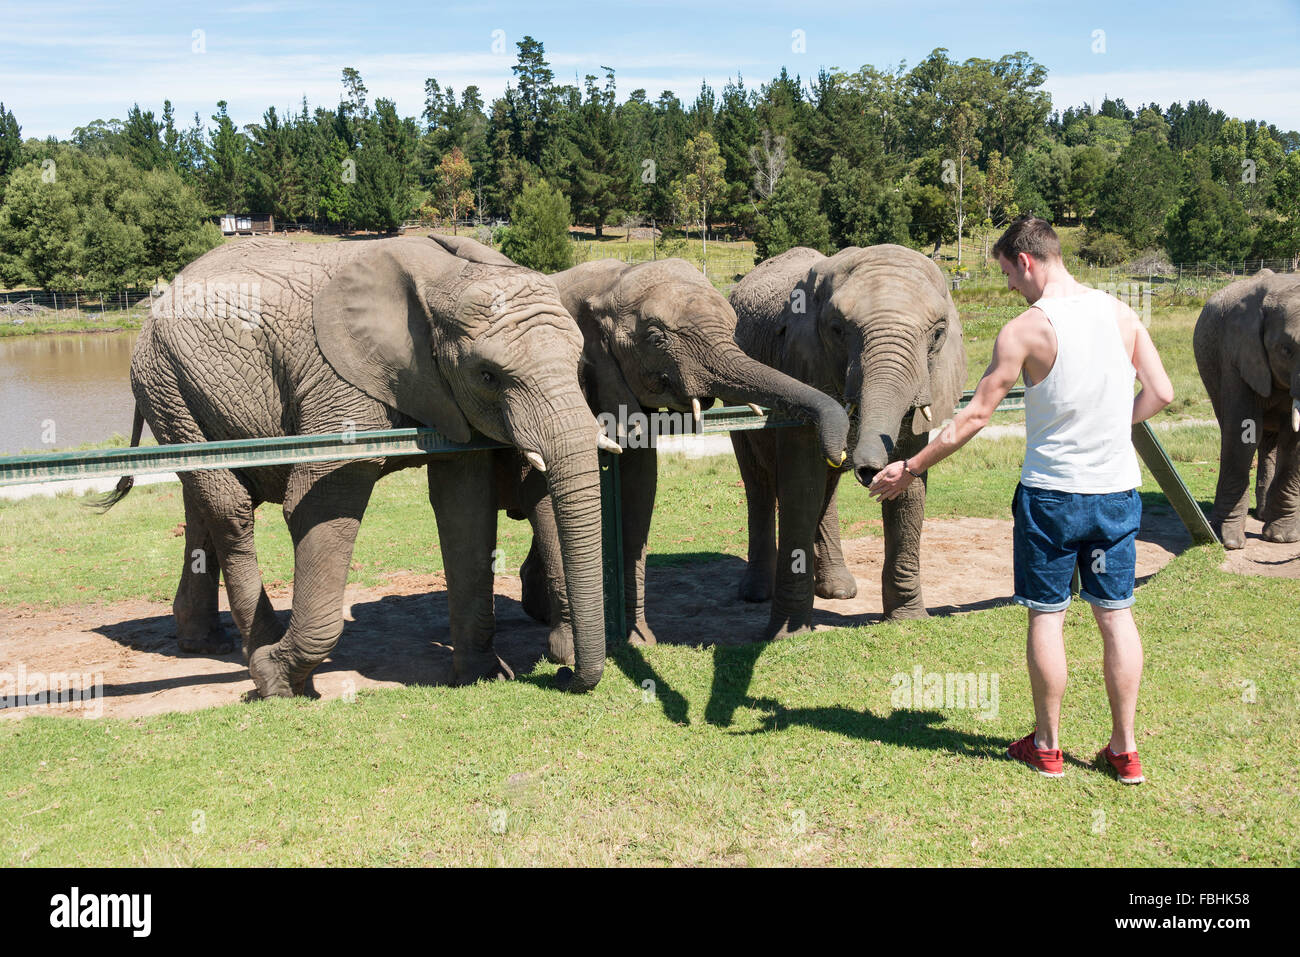 Feeding elephants at Knysna Elephant Park, Plettenberg Bay, Knysna, Knysna Municipality, Western Cape Province, South Africa Stock Photo